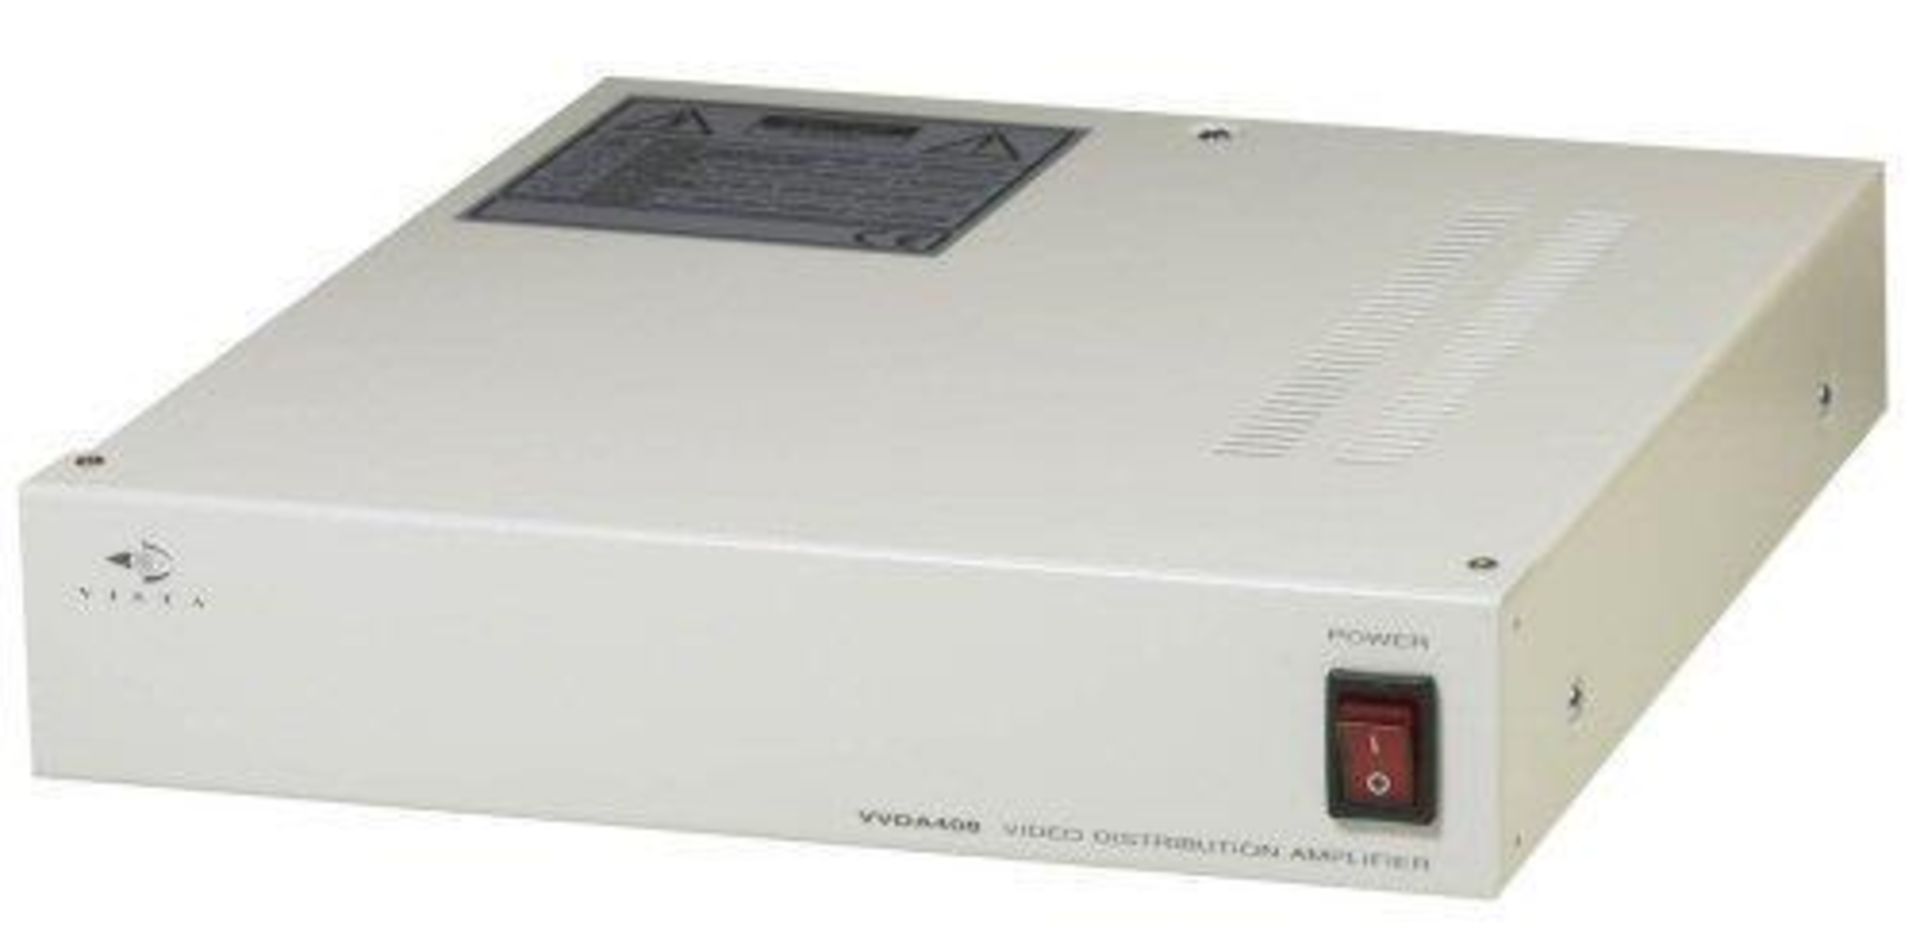 Vista VVDA204 Video distribution amplifier range - Ex Warehouse stock